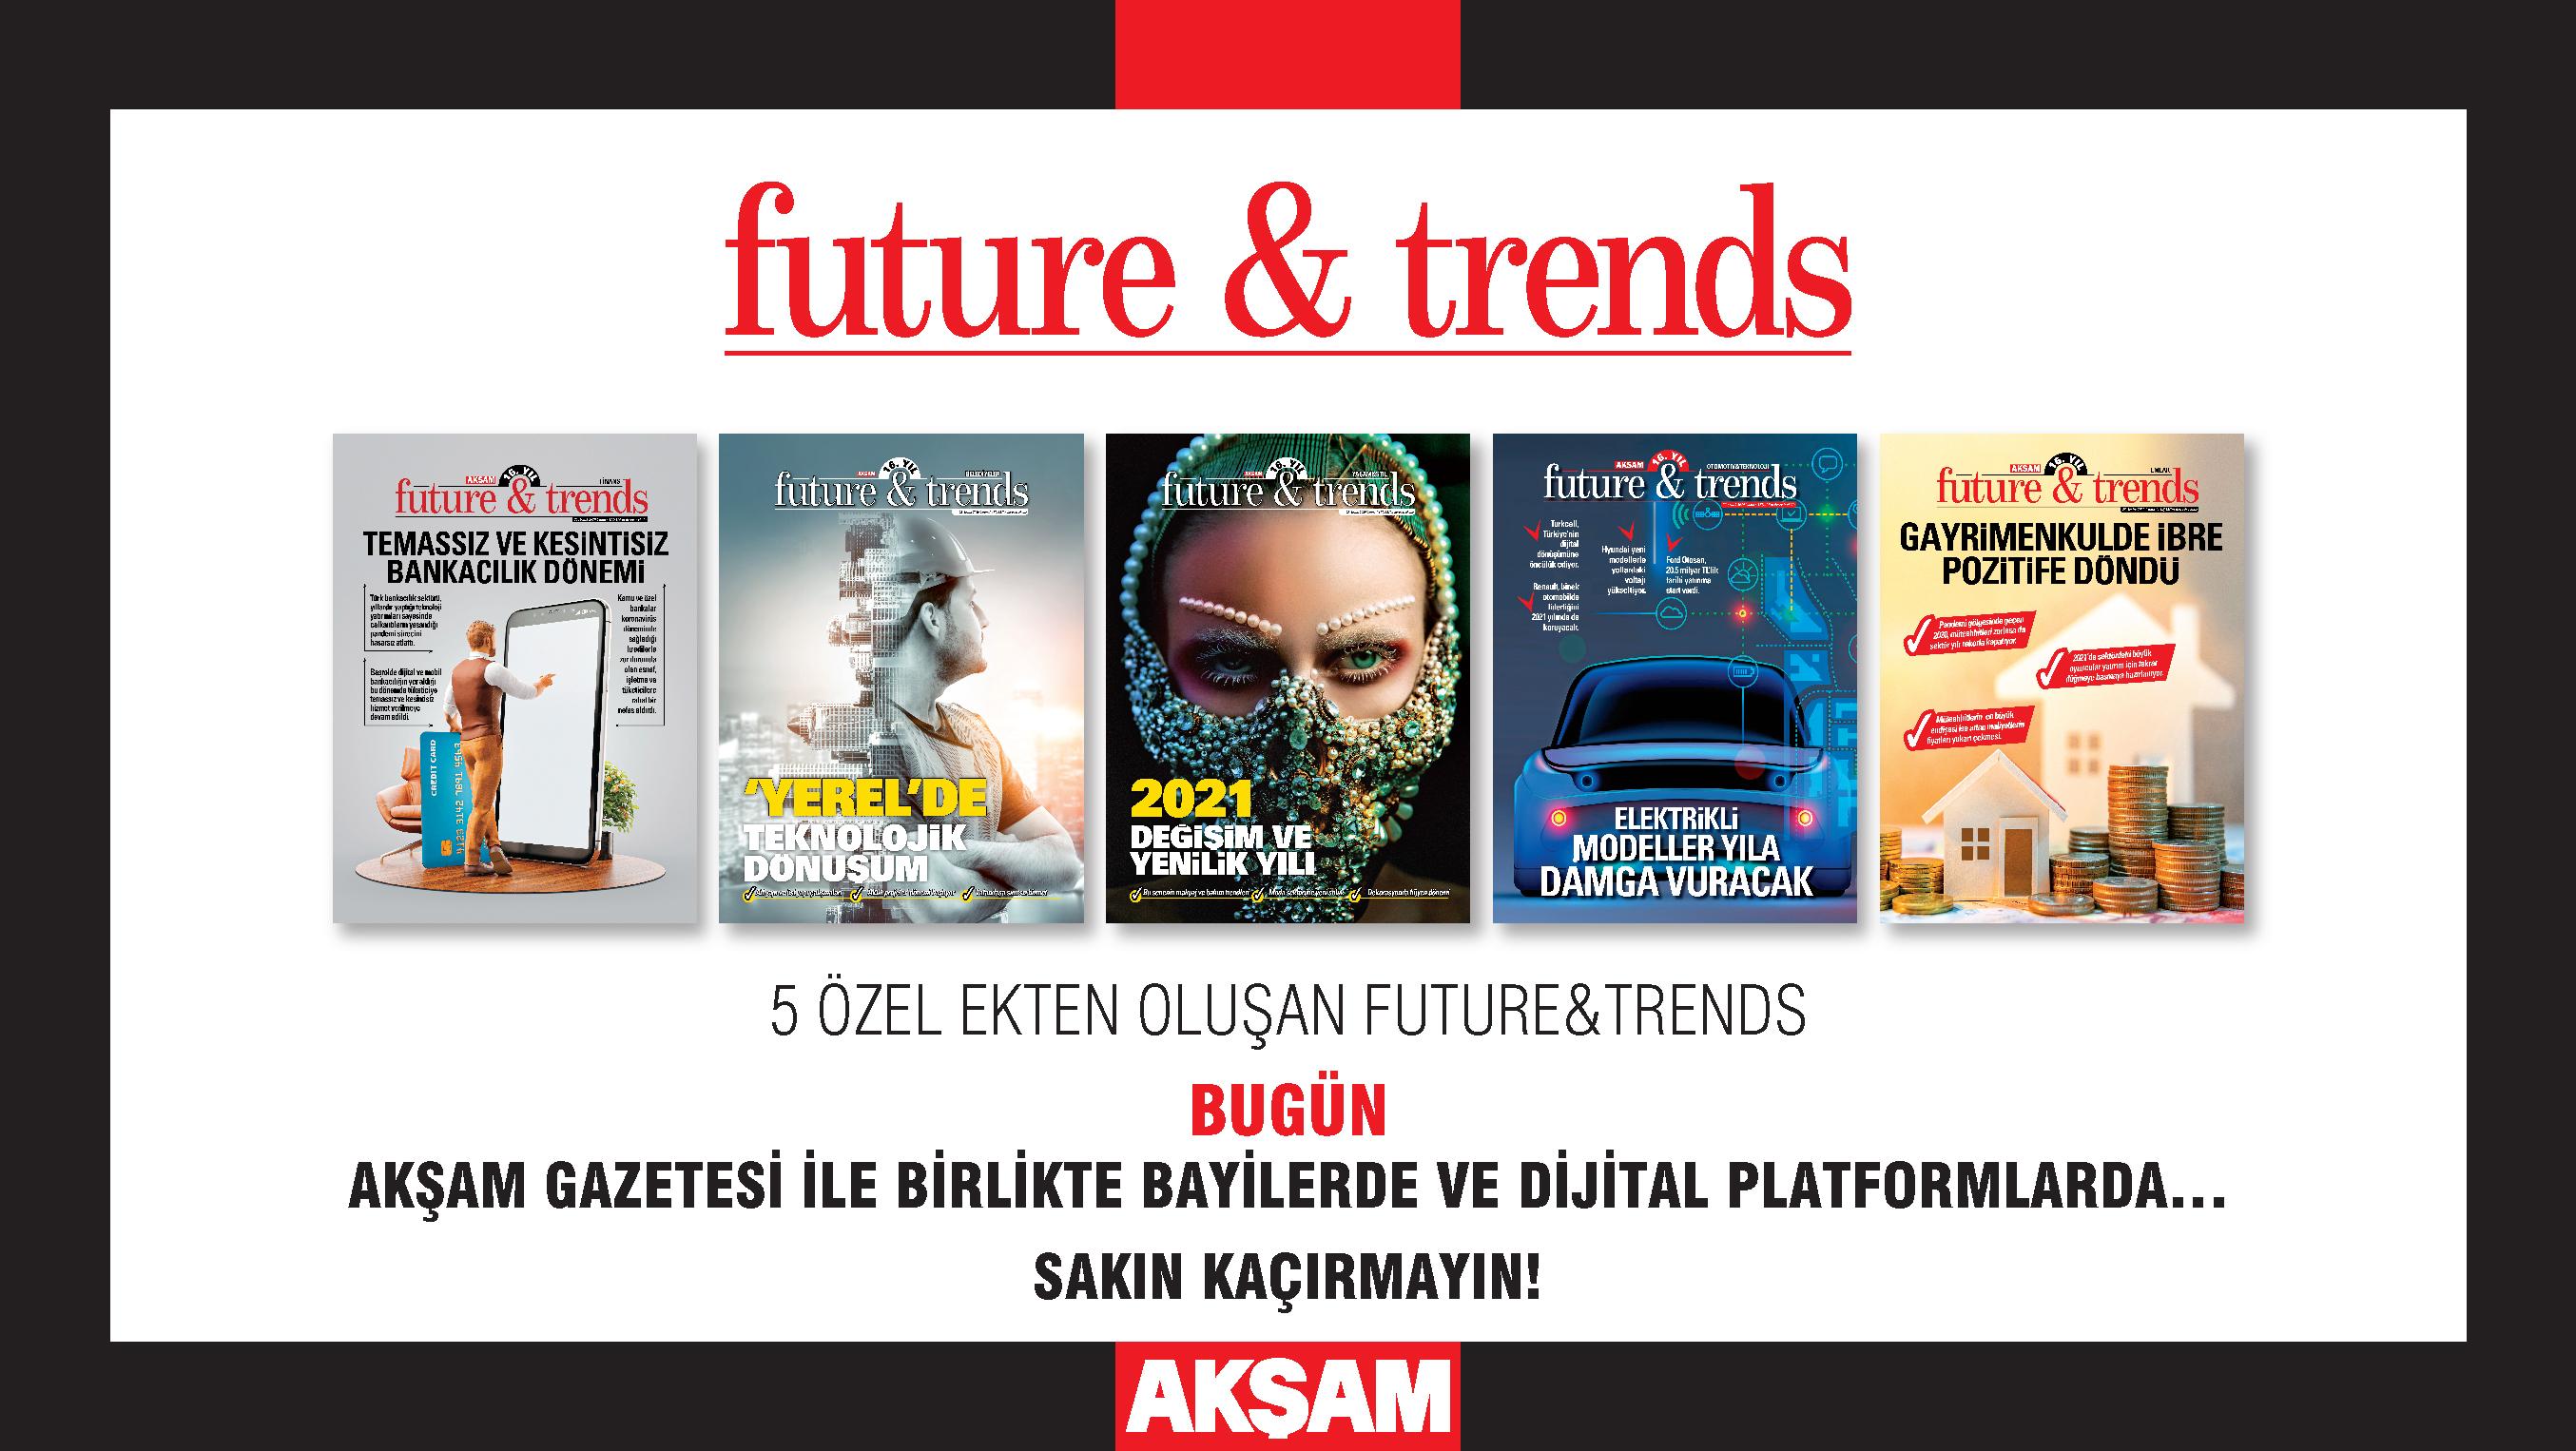 Future&Trends 25 Aralk Cuma gn Akam Gazetesi ile birlikte